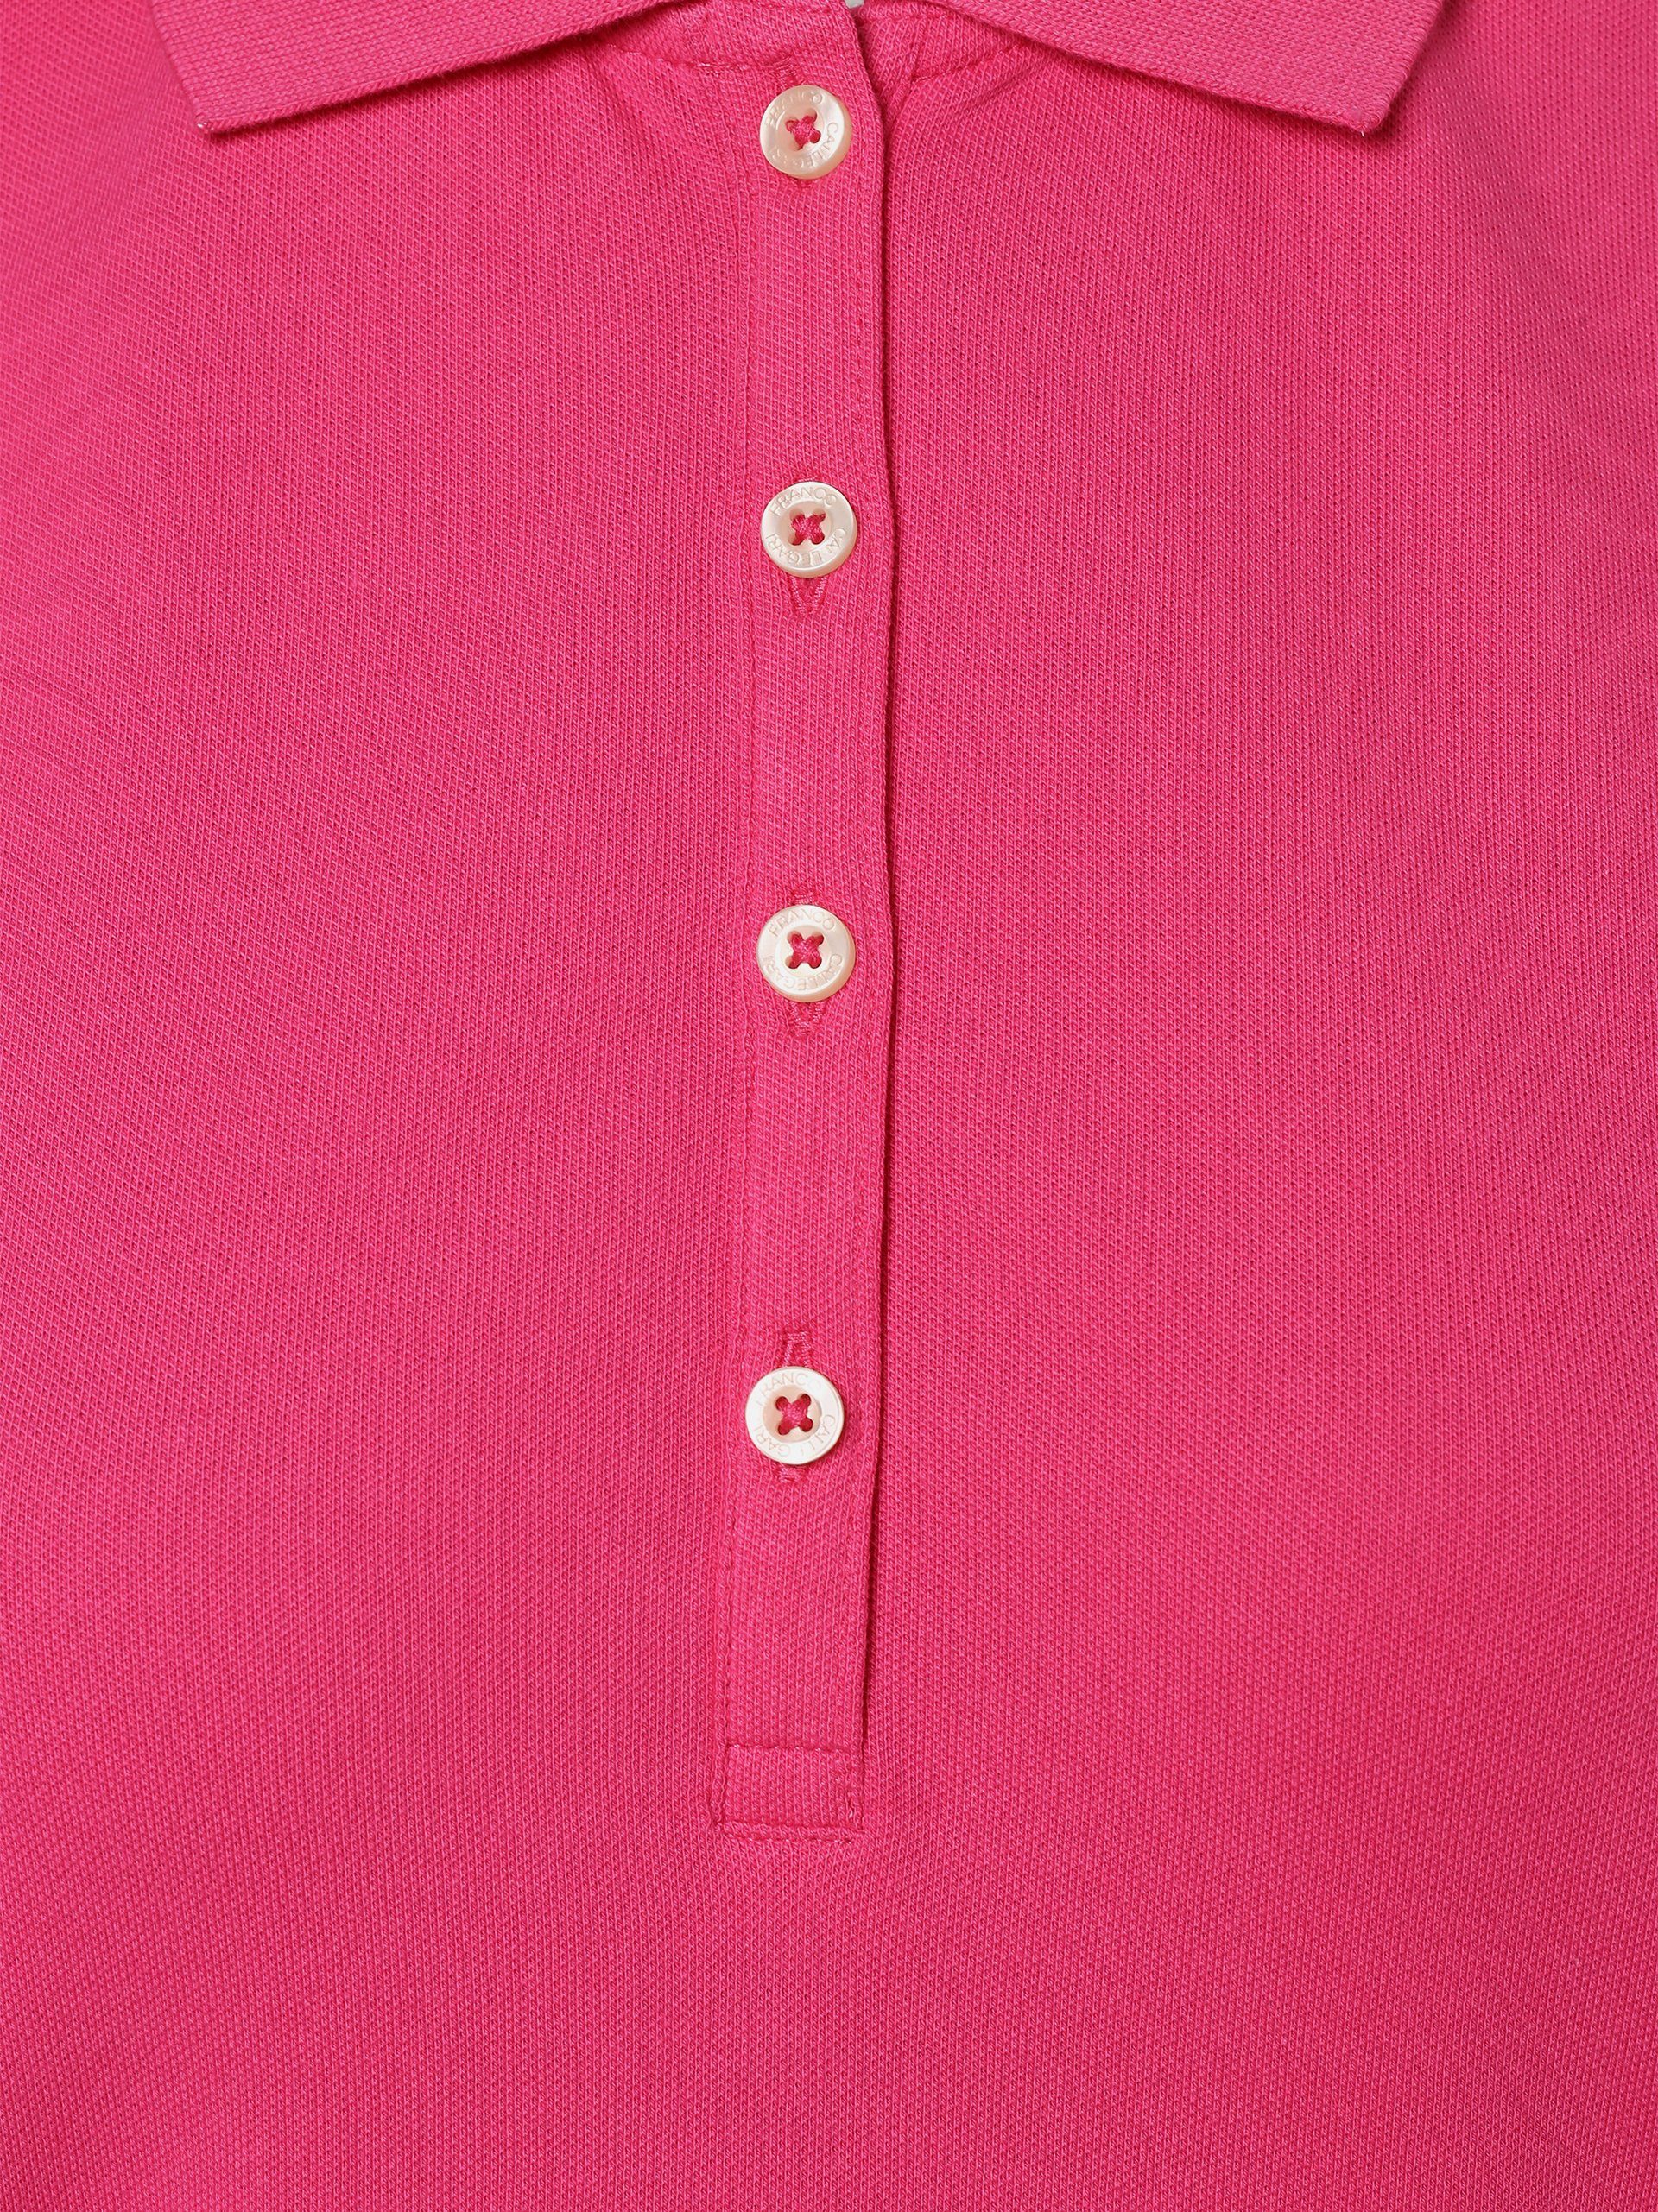 Franco Callegari Poloshirt pink